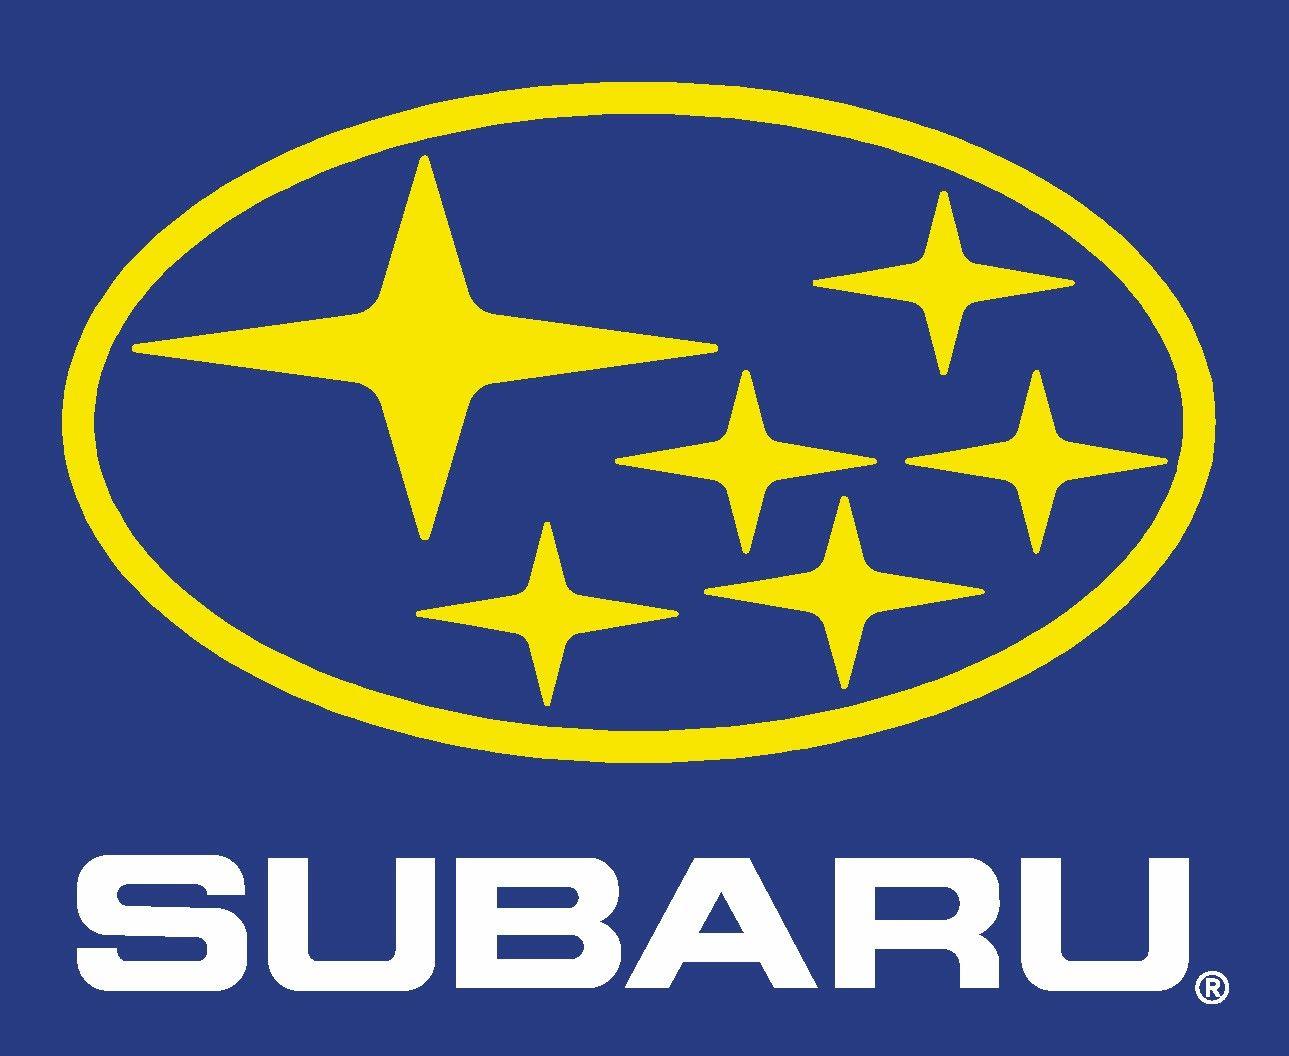 Old Subaru Logo - Subaru Logo, Subaru Car Symbol Meaning and History. Car Brand Names.com